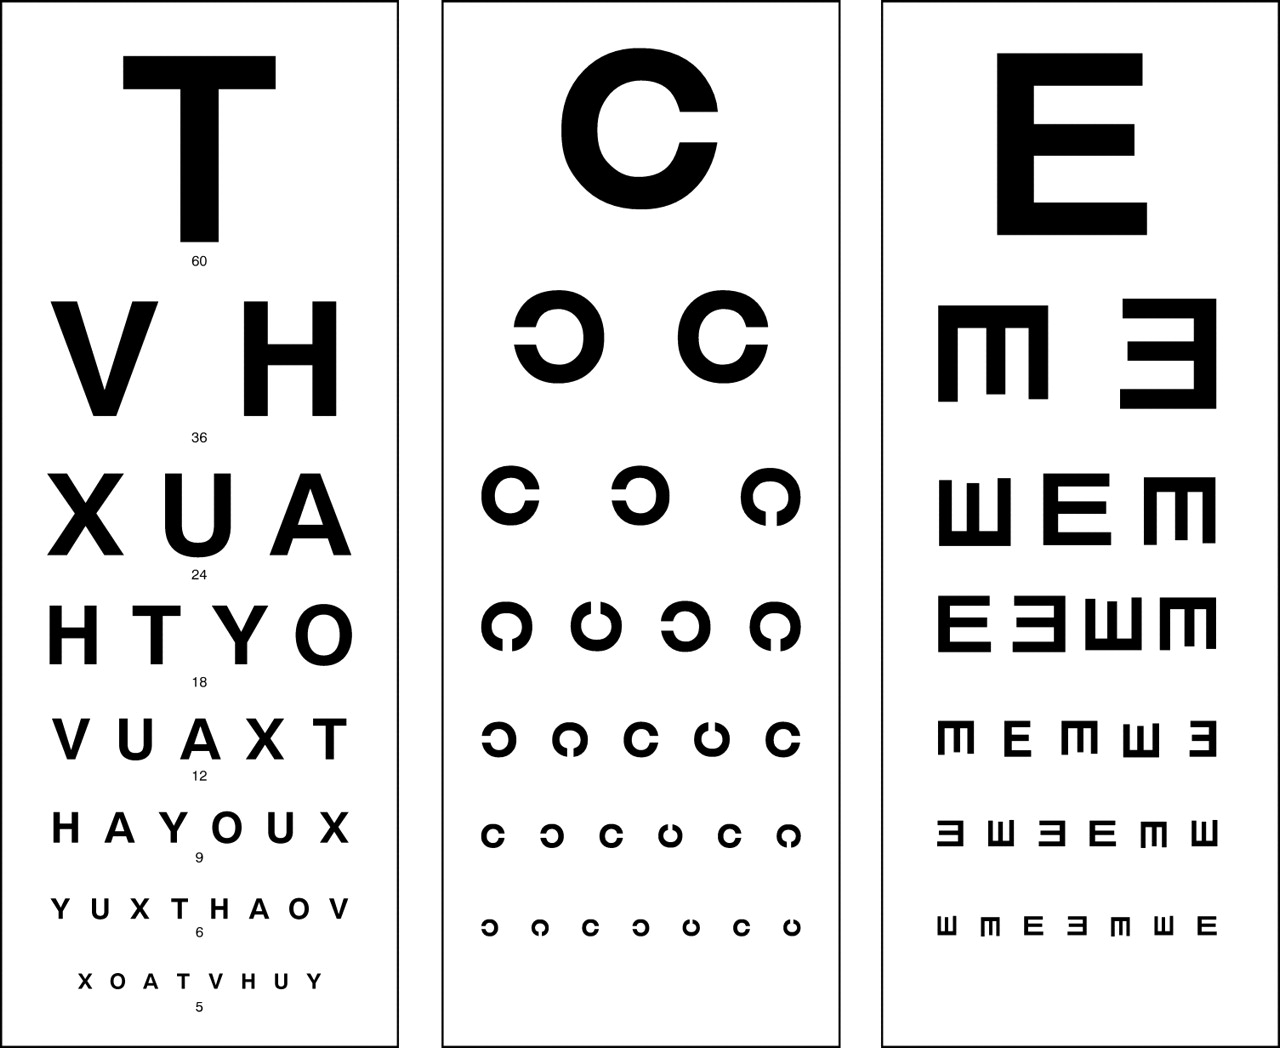 Eyesight Measurement Chart